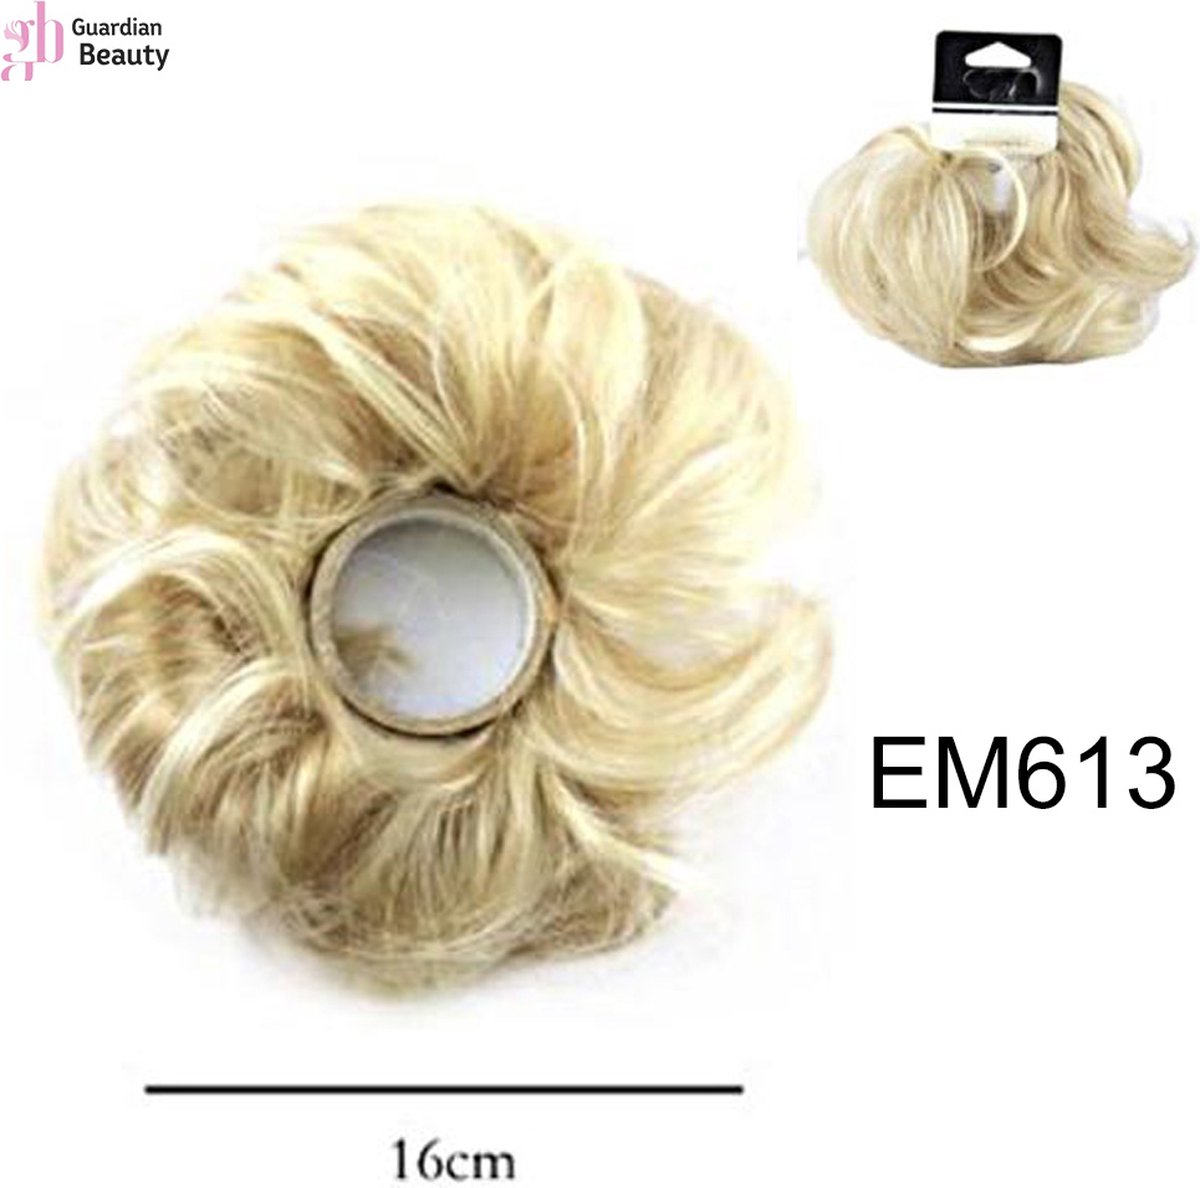 Haarstuk Bun Em613 | Haar wrap extension | Haarstuk Clip-In Twist Bun | Hair Bun | Haarstuk Hair Extensions Donut Ponytail Messy Bun